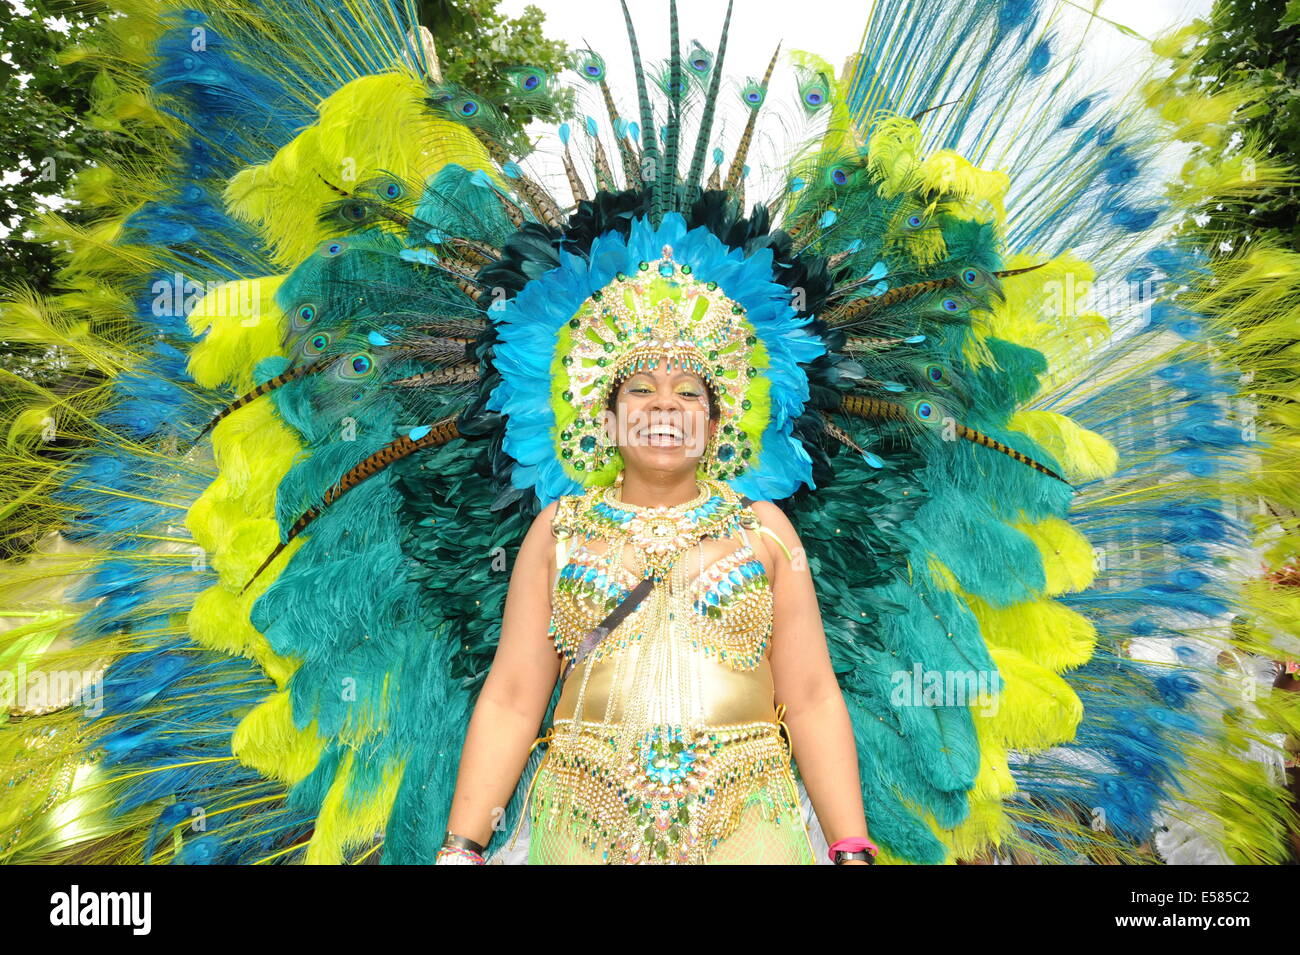 https://c8.alamy.com/comp/E585C2/women-wearing-traditional-caribbean-carnival-costume-at-notting-hill-E585C2.jpg